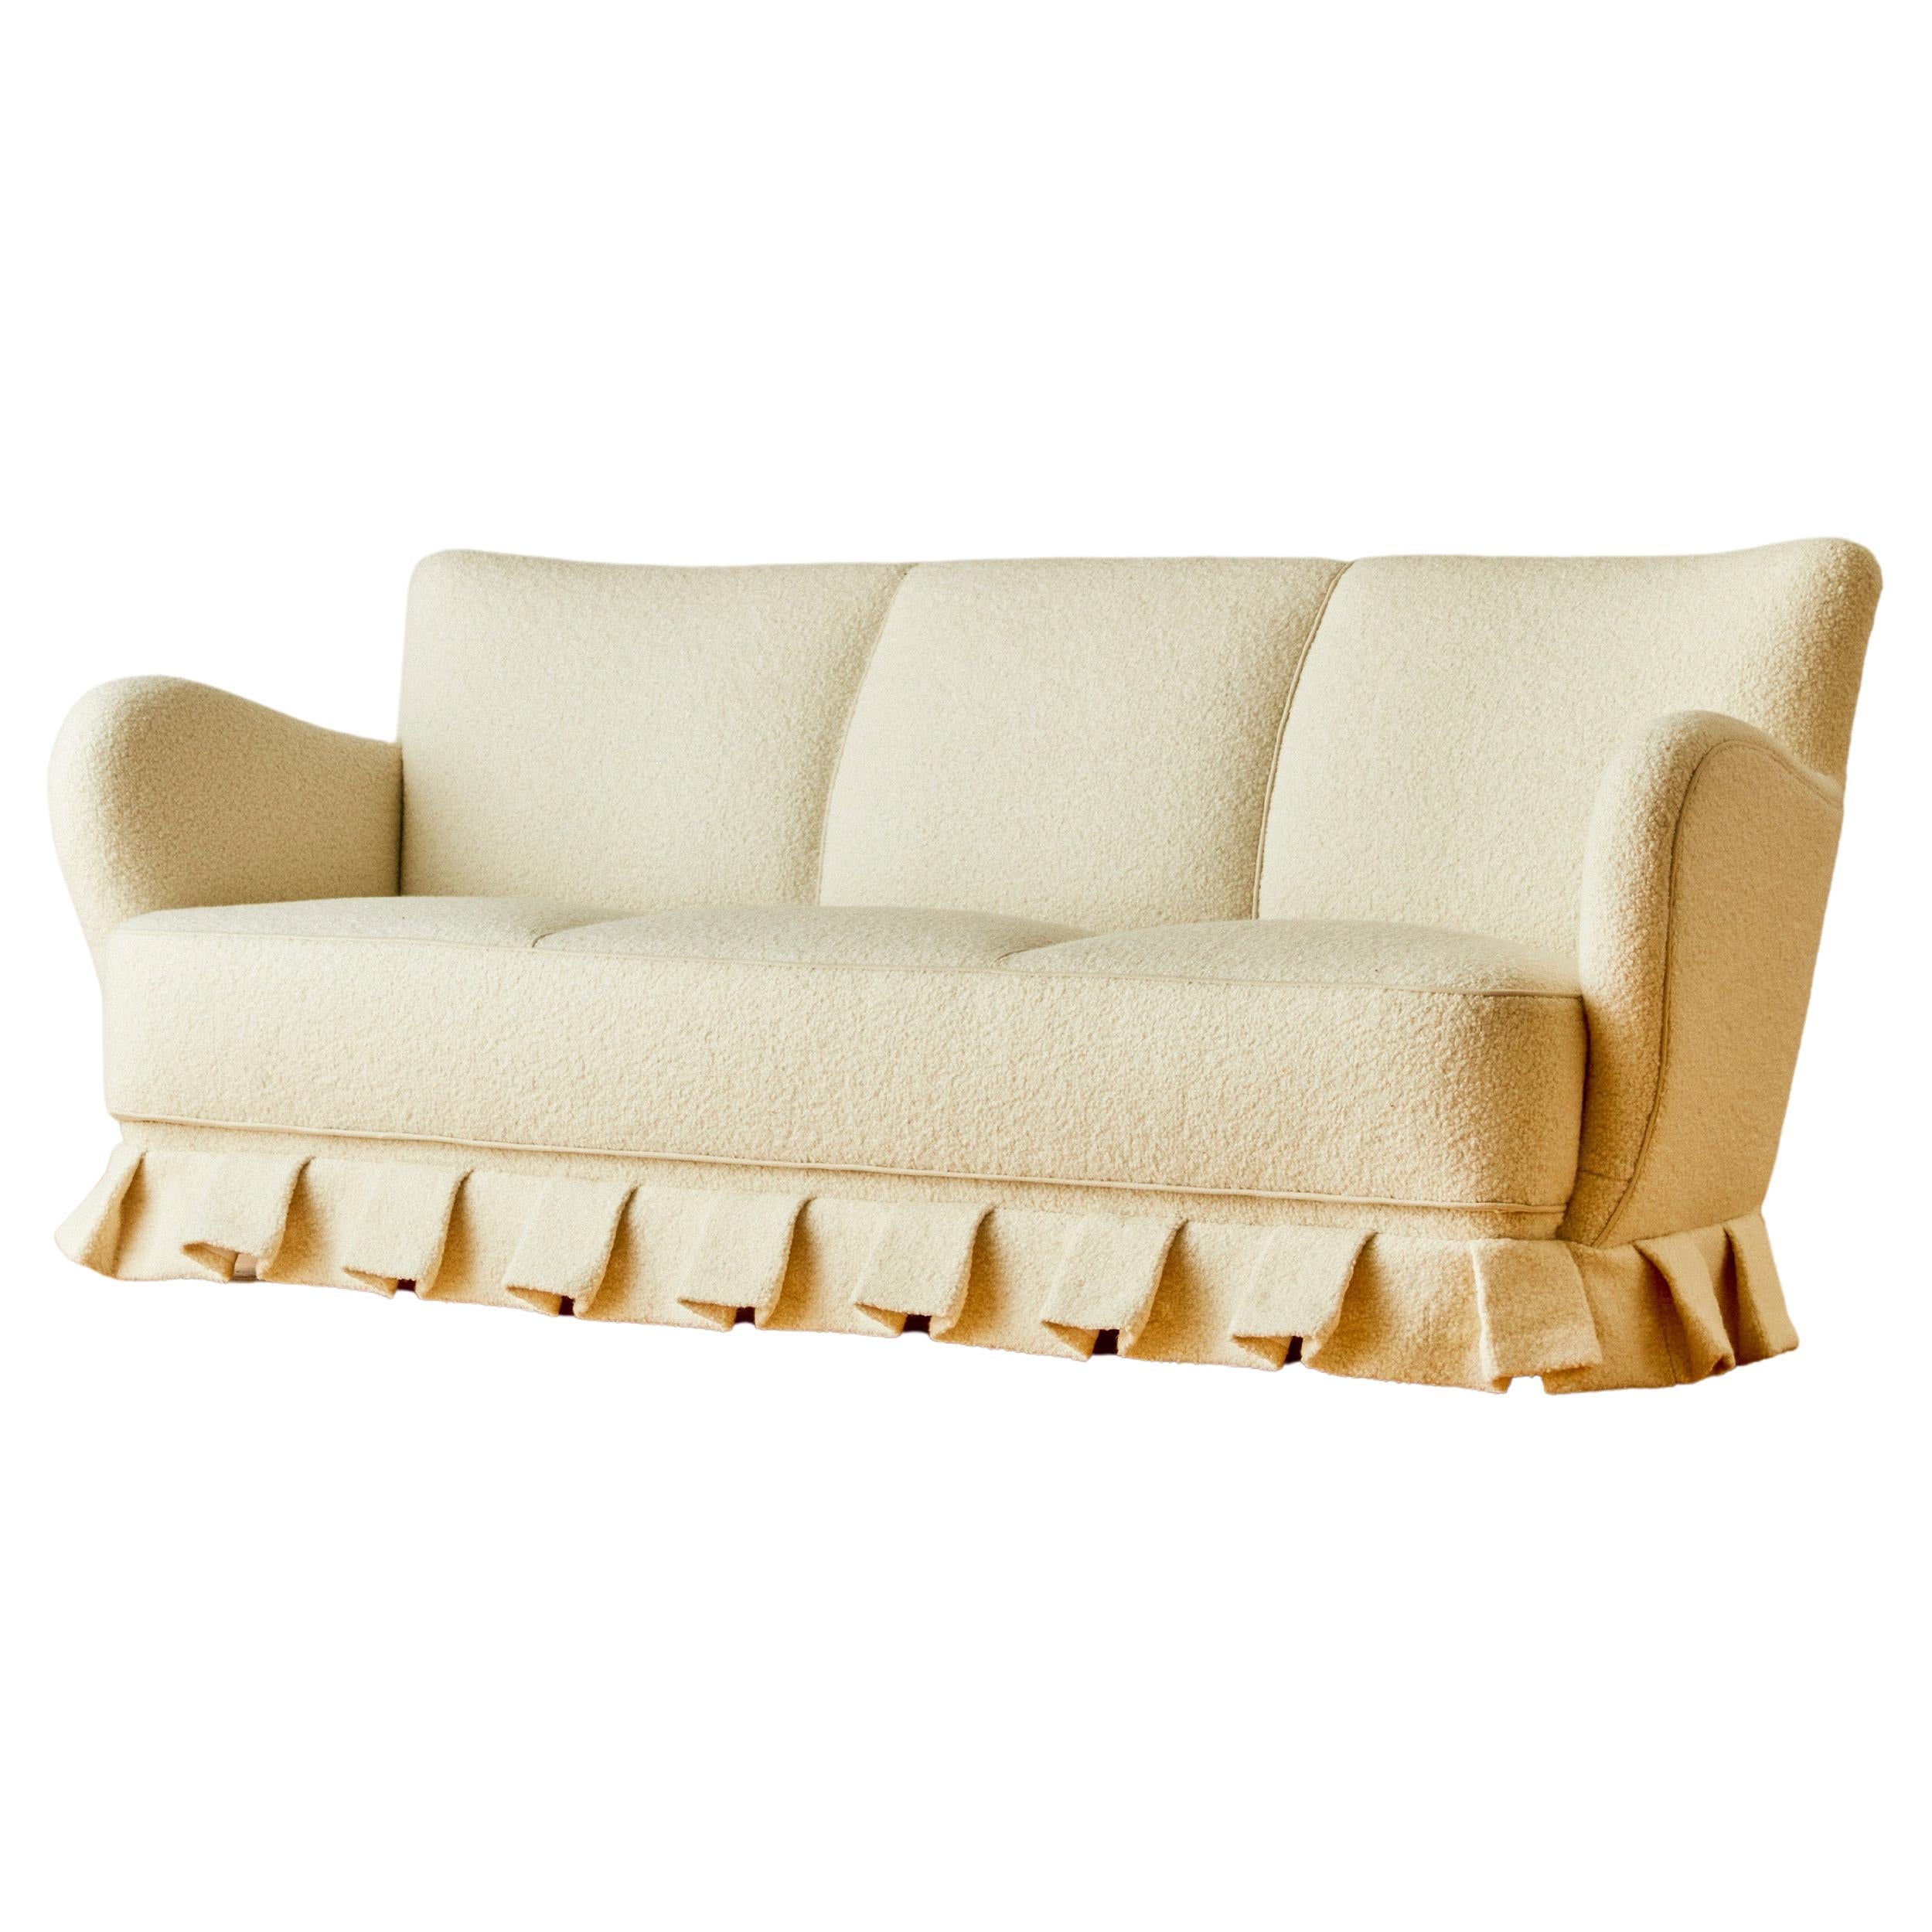 Danish Mid Century Modern Sofa with a Ruffled Skirt For Sale